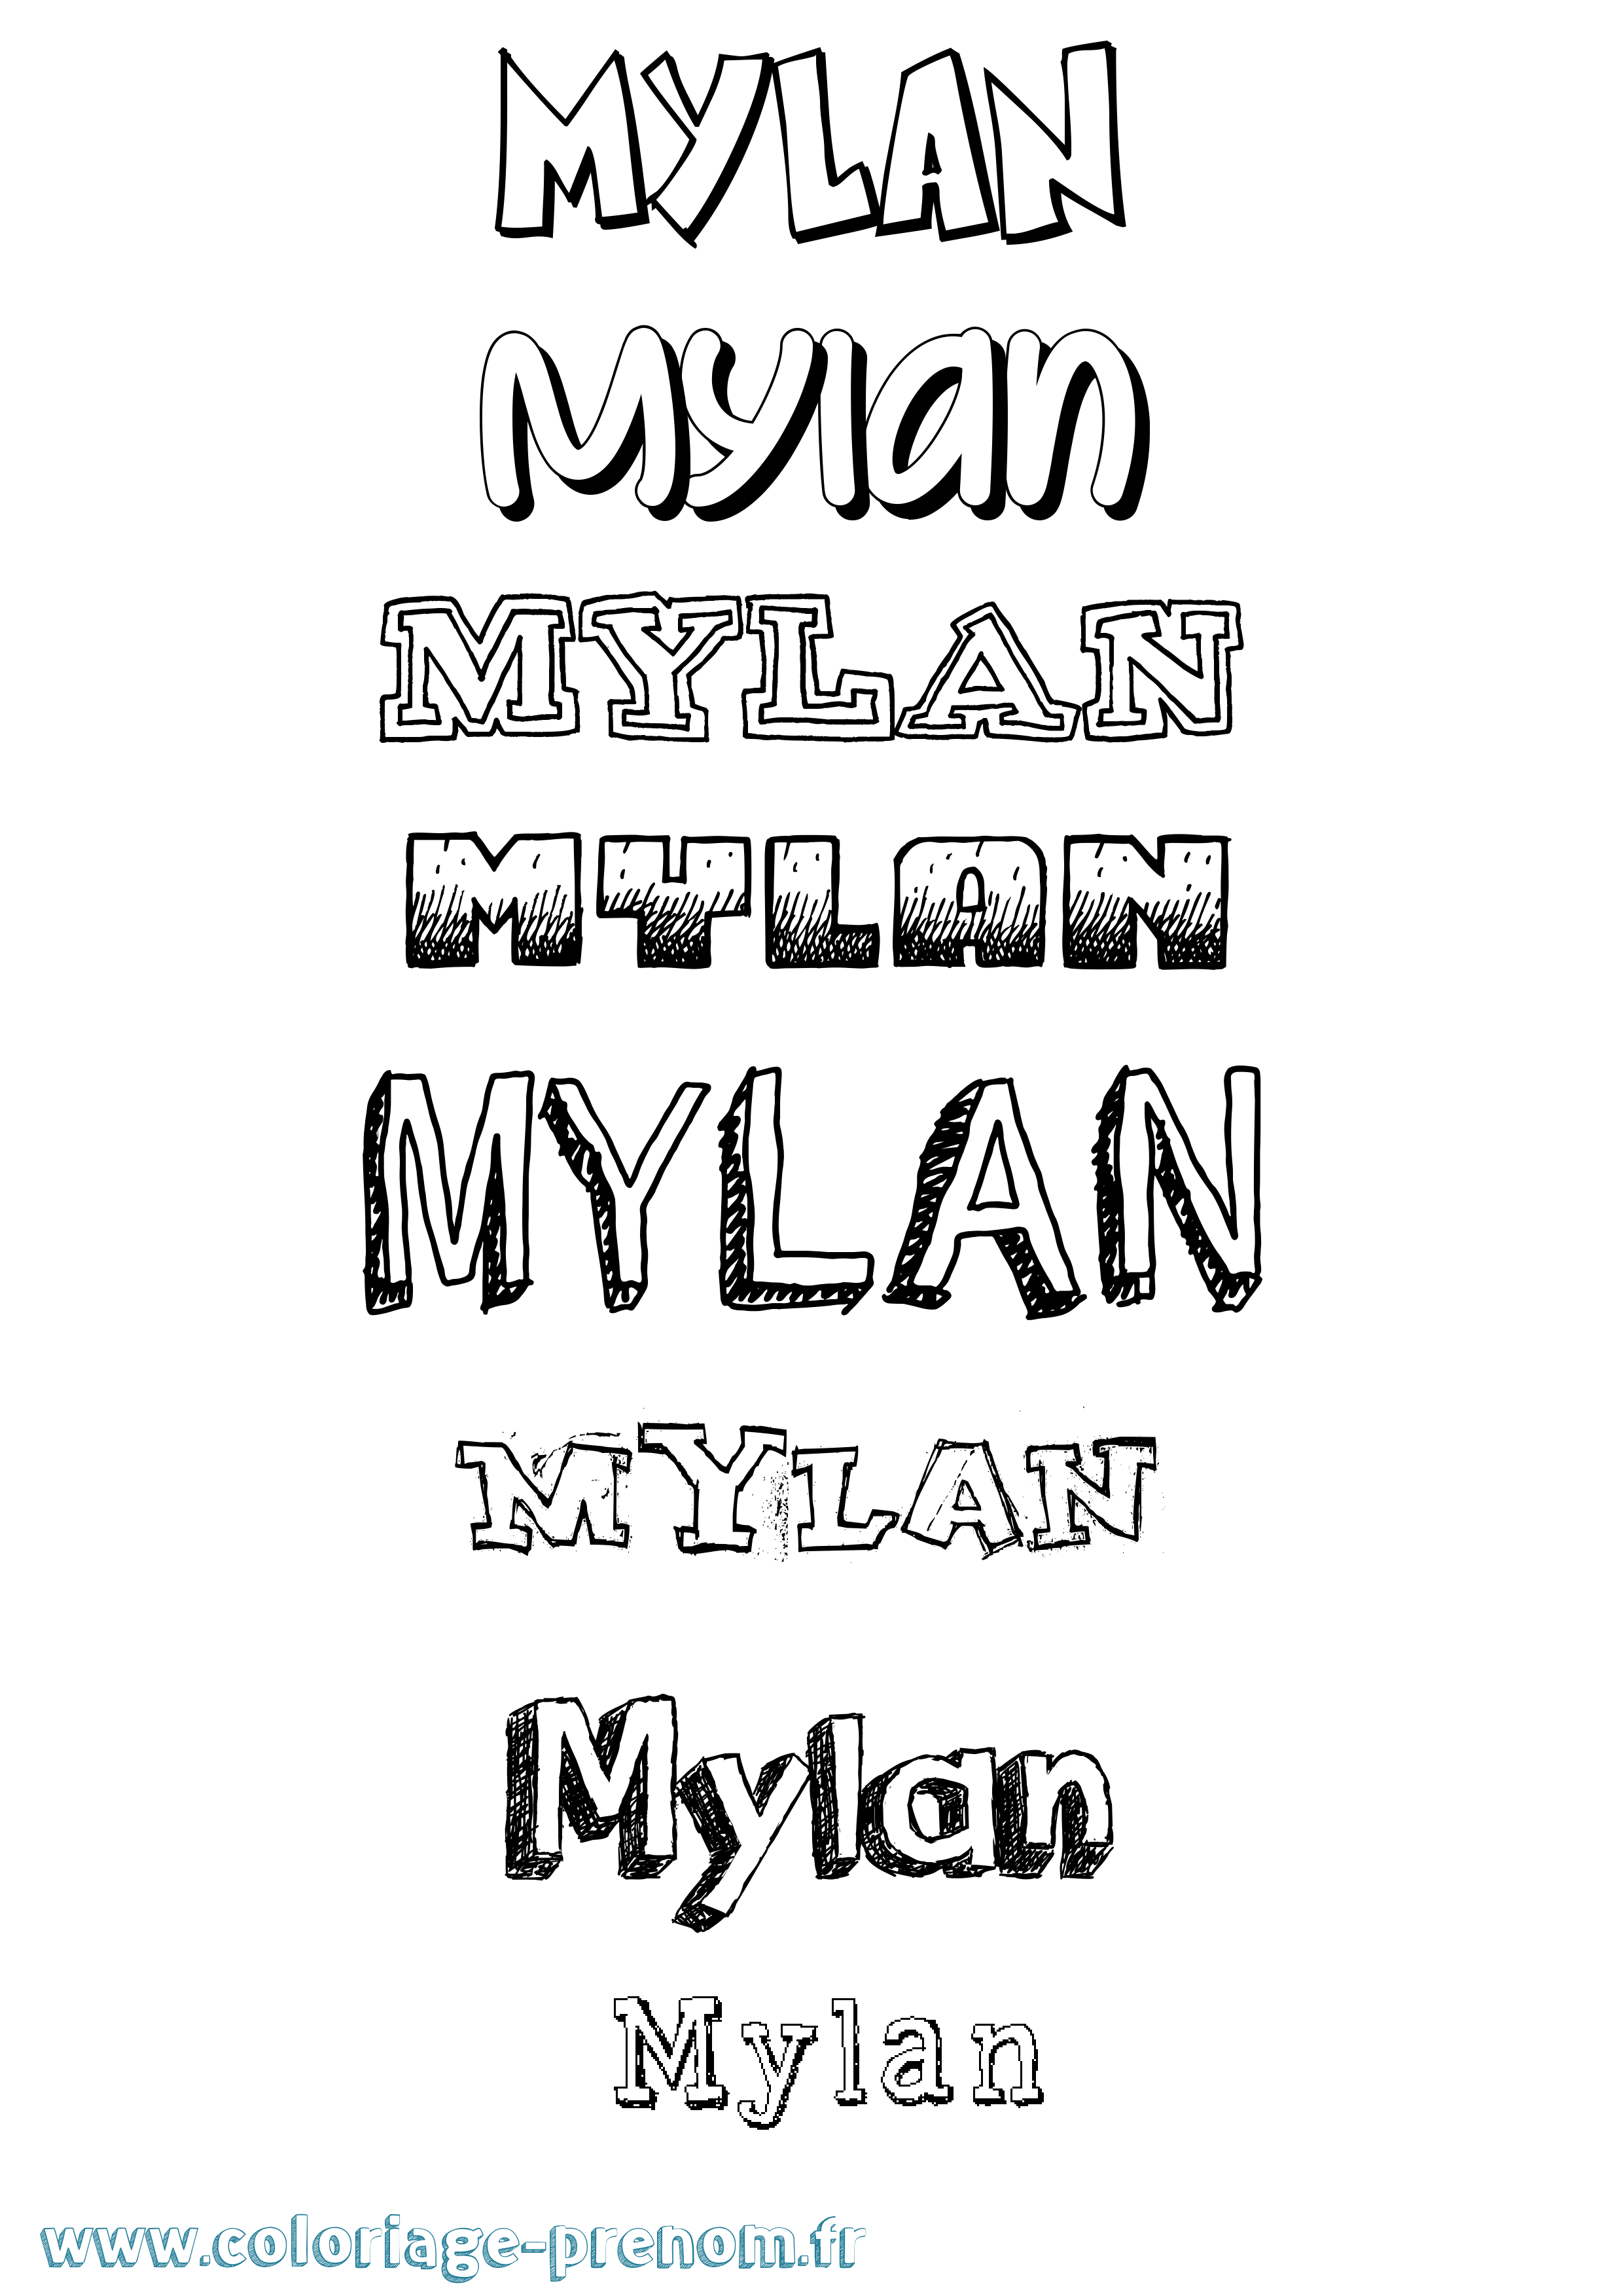 Coloriage prénom Mylan Dessiné